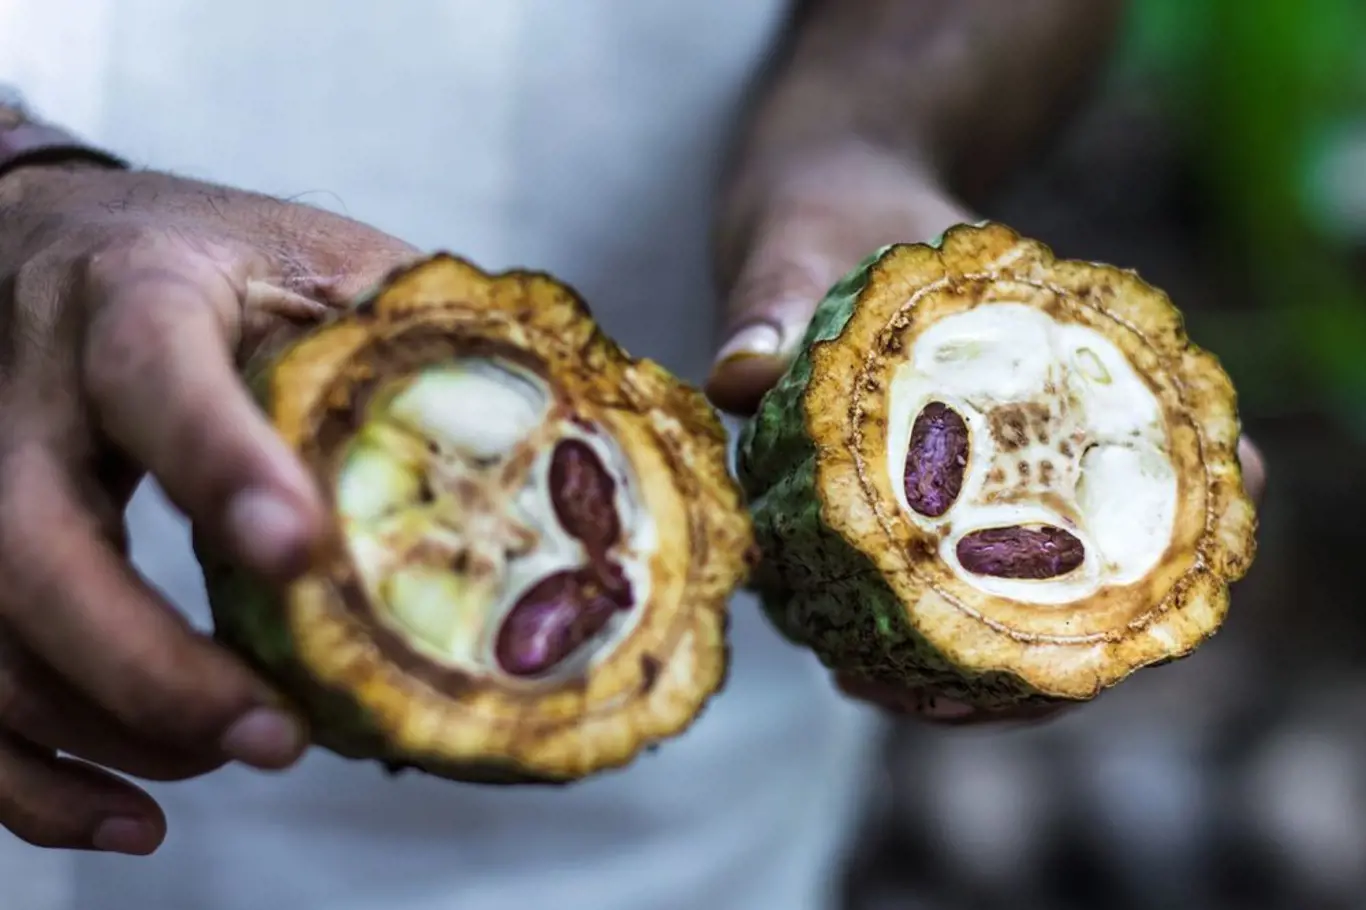 Plody kakaovníku v sobě skrývají cenná, všemi milovaná semena